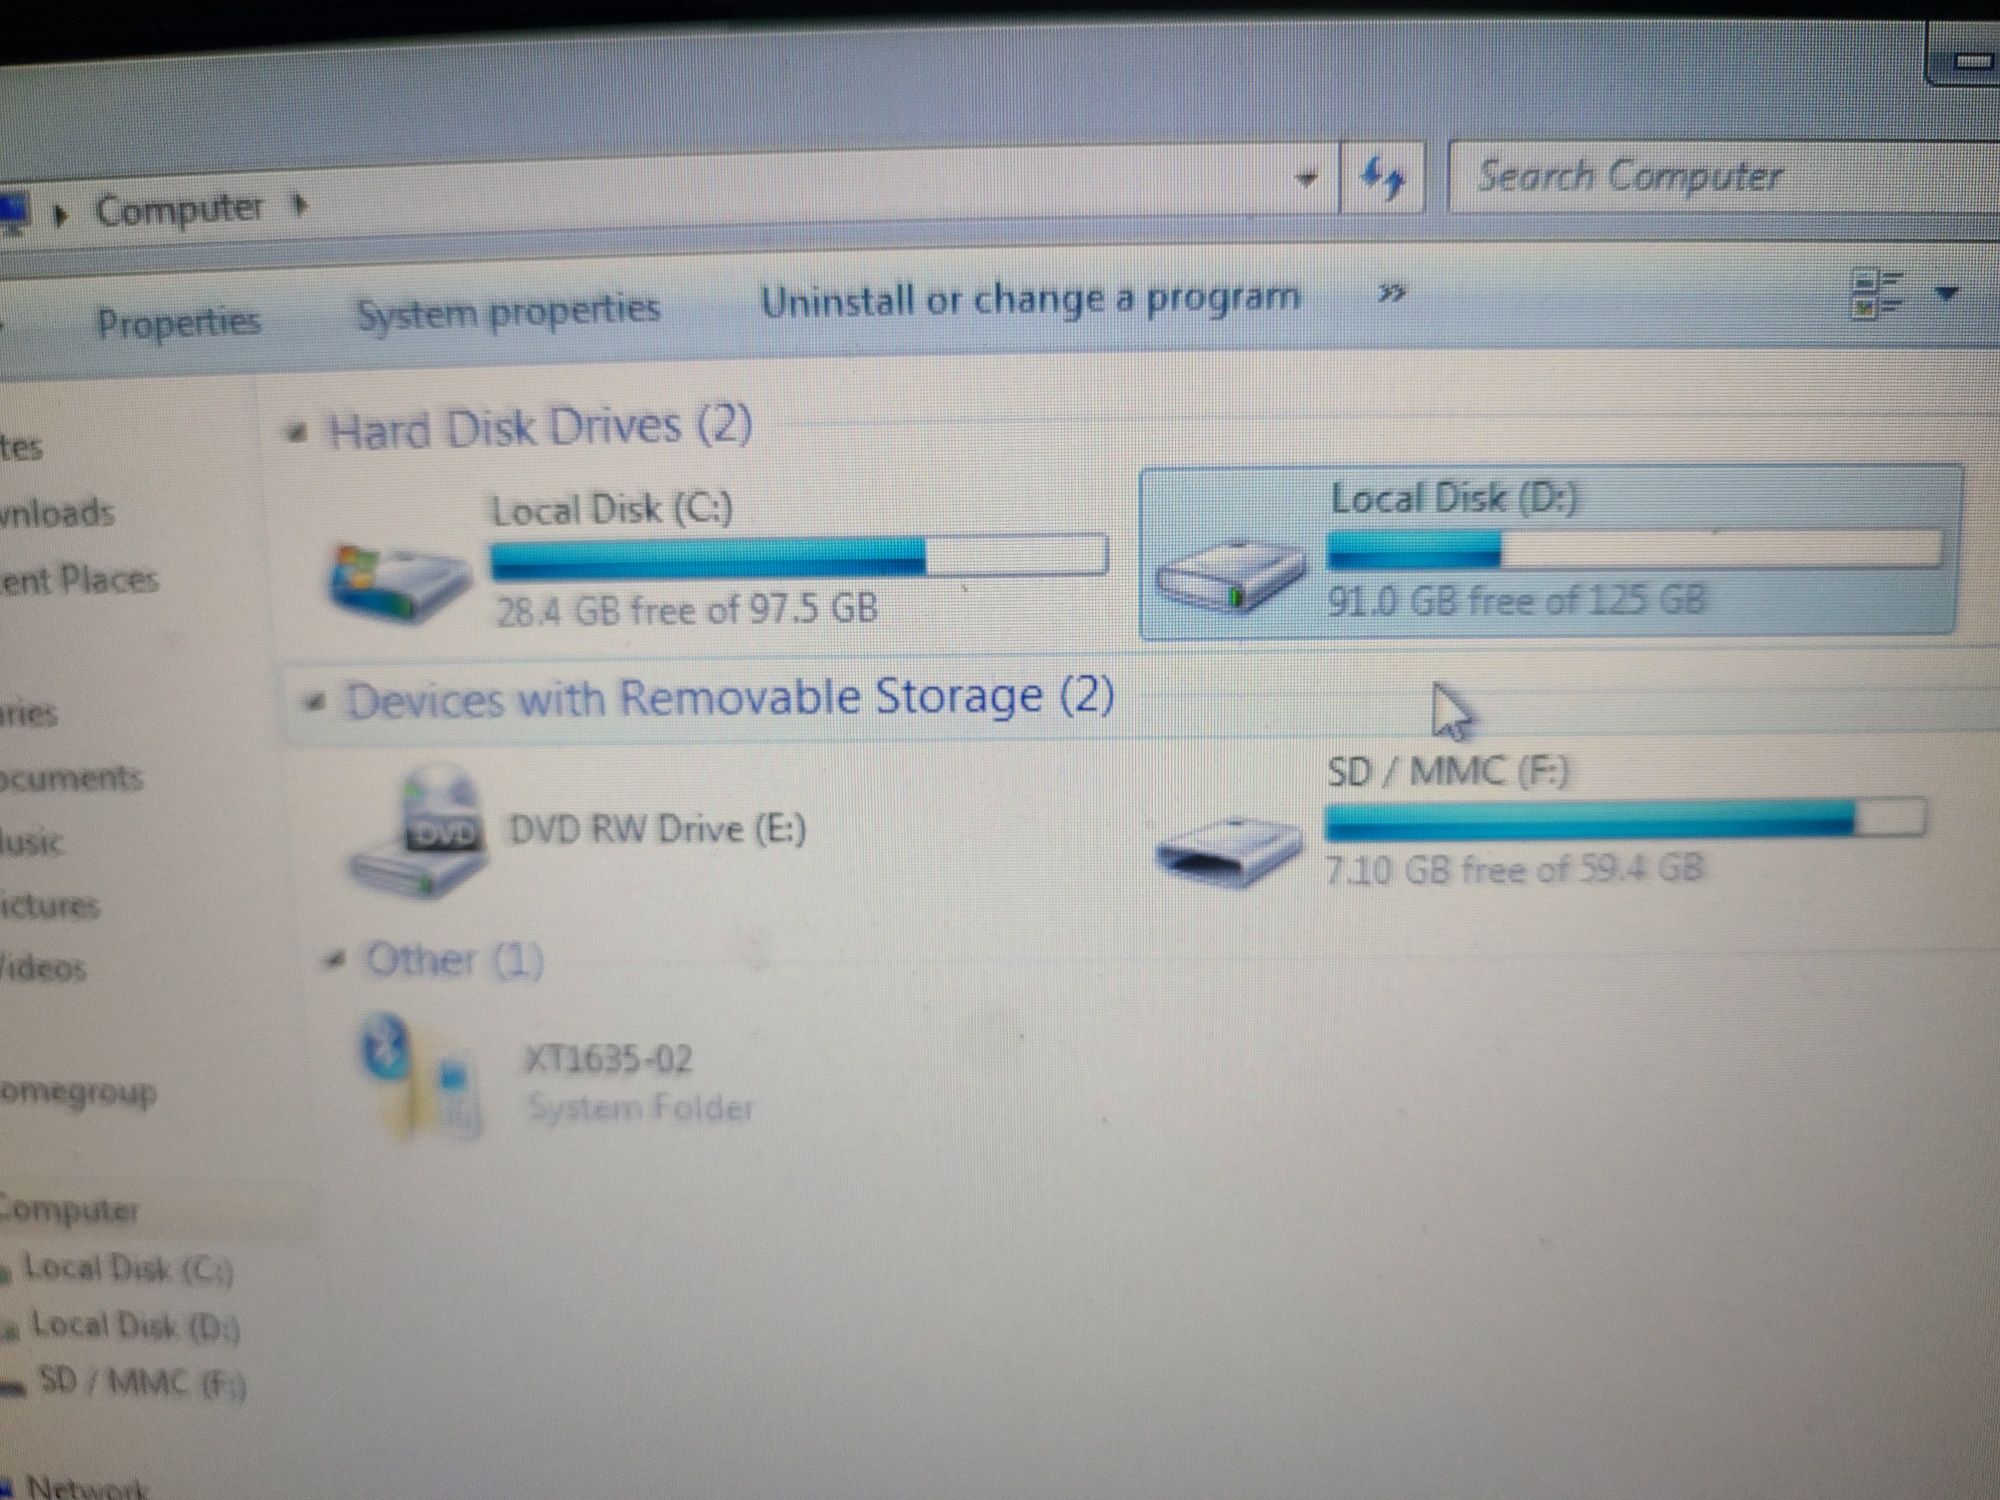 Display laptop Dell Precision M4500 cu rama și capac